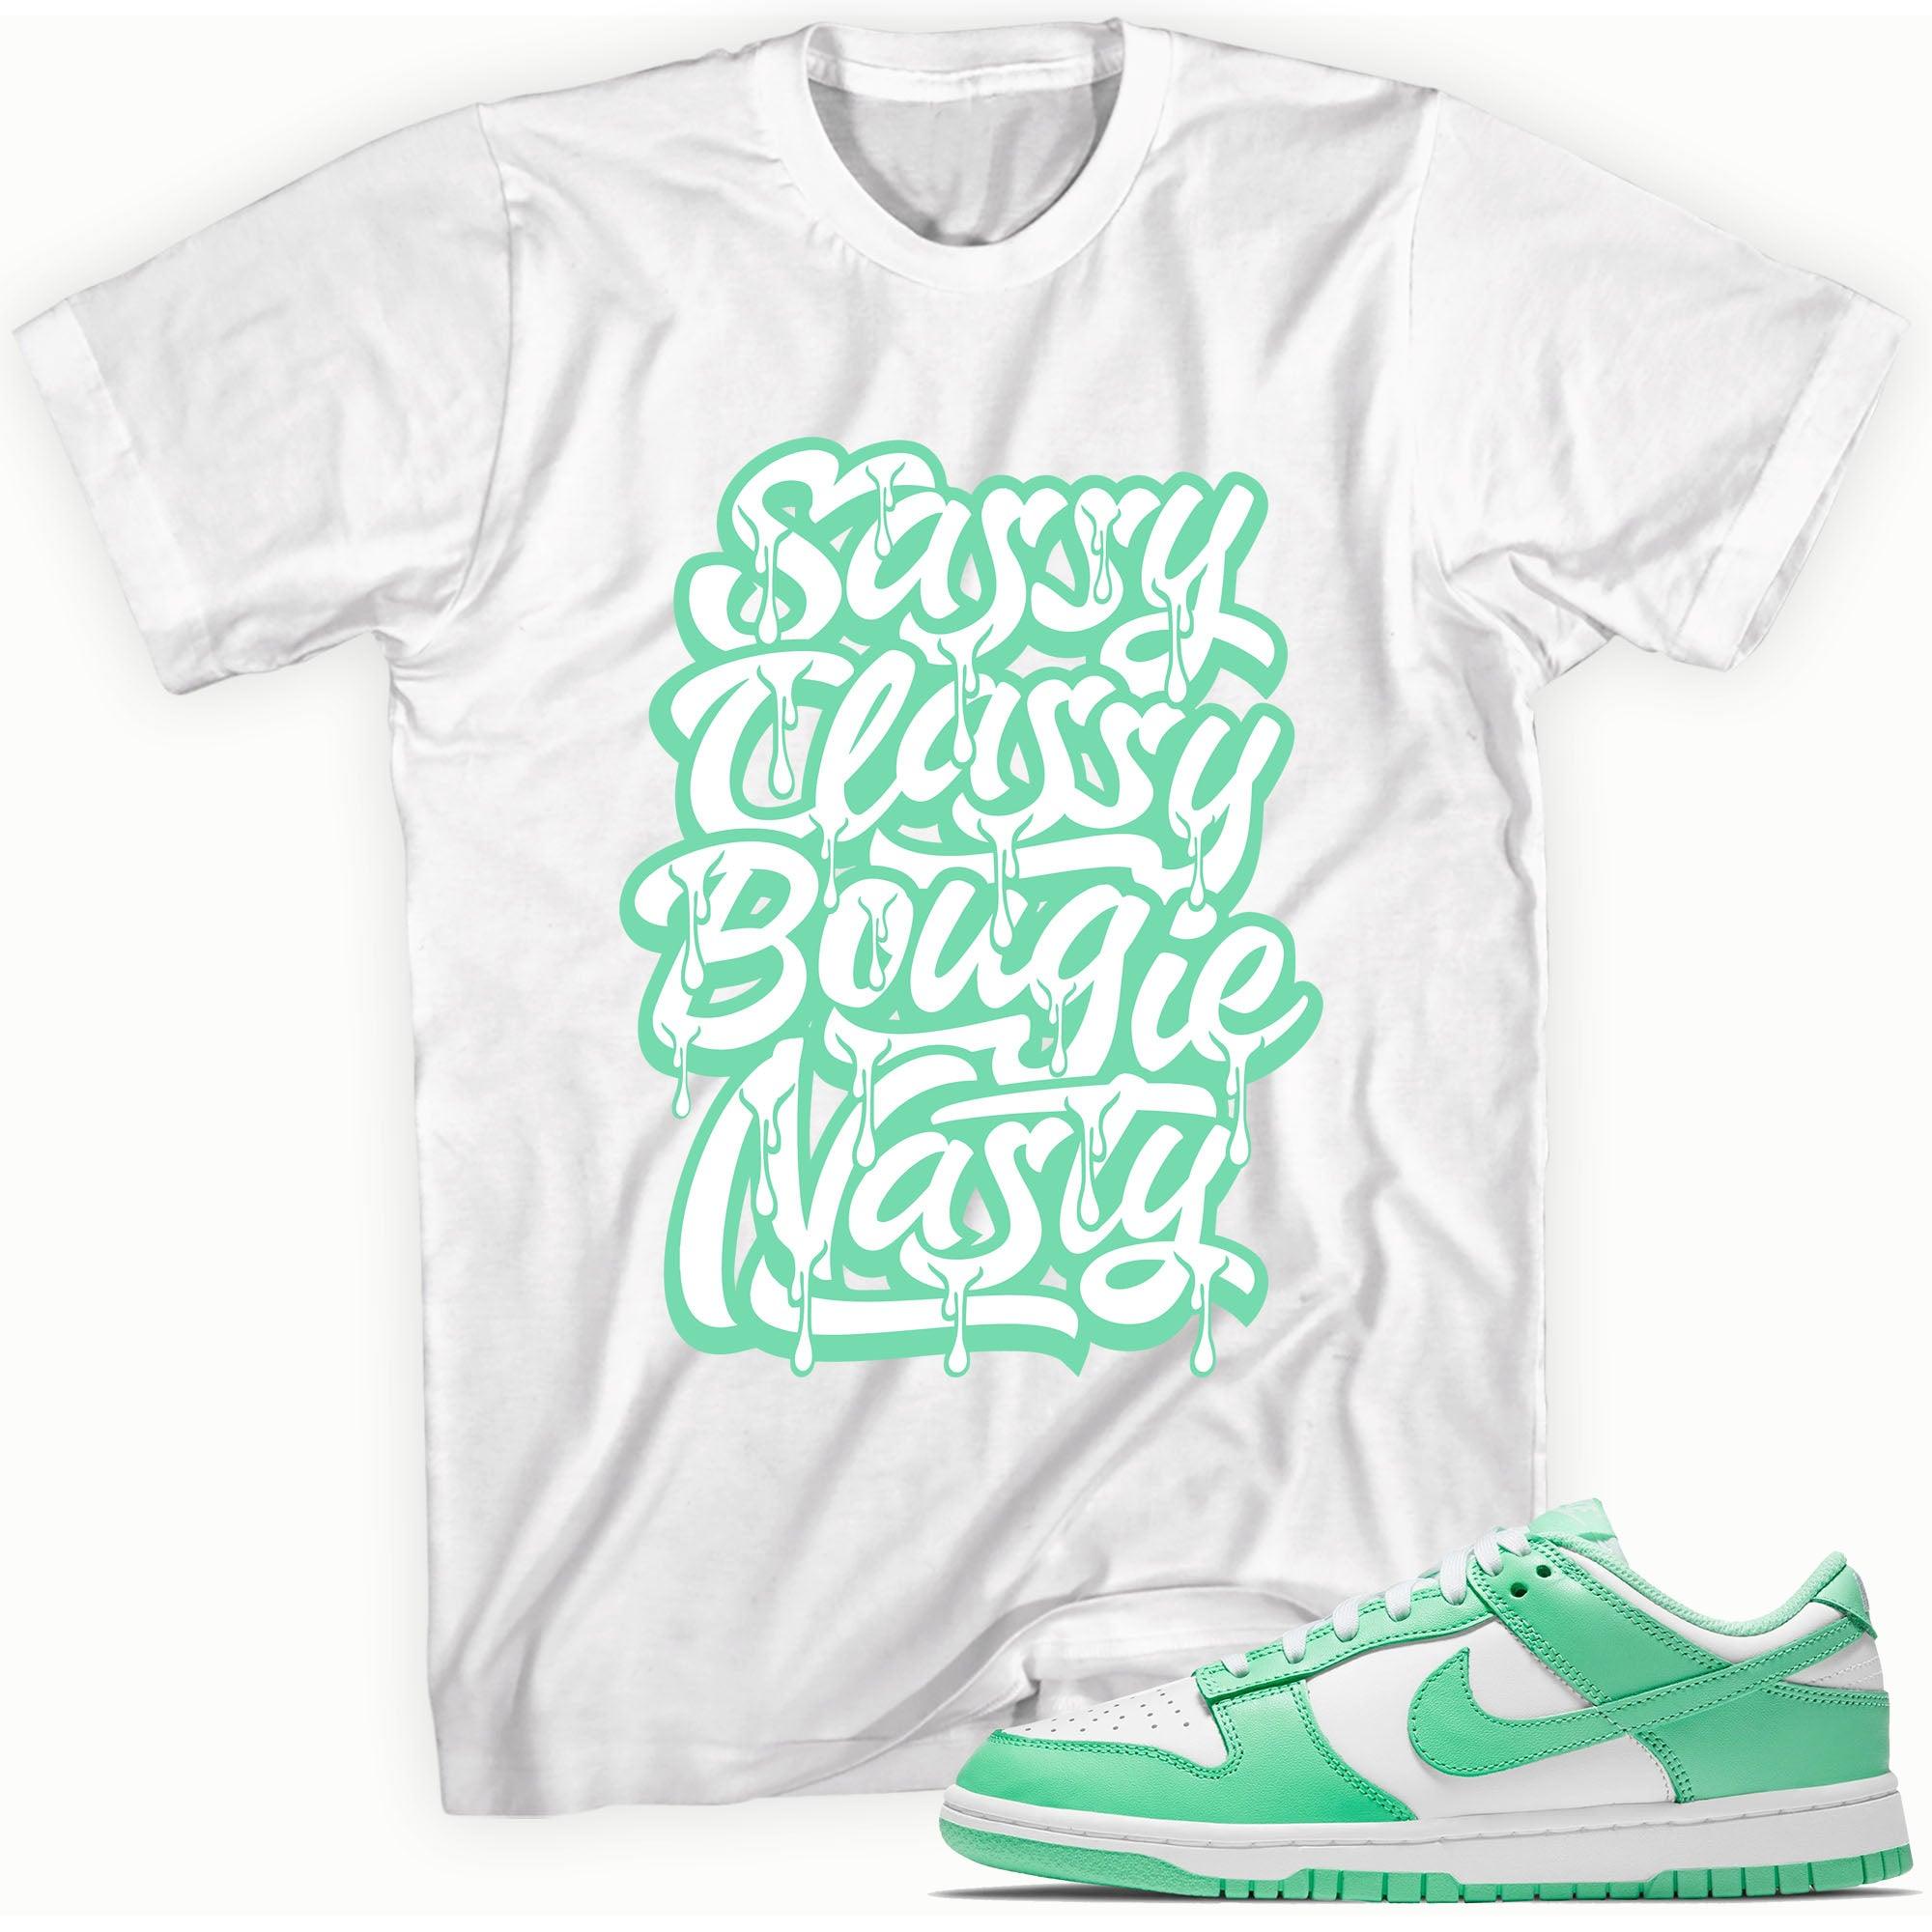 Sassy Classy Sneaker Tee Nike Dunk Low Green Glow photo